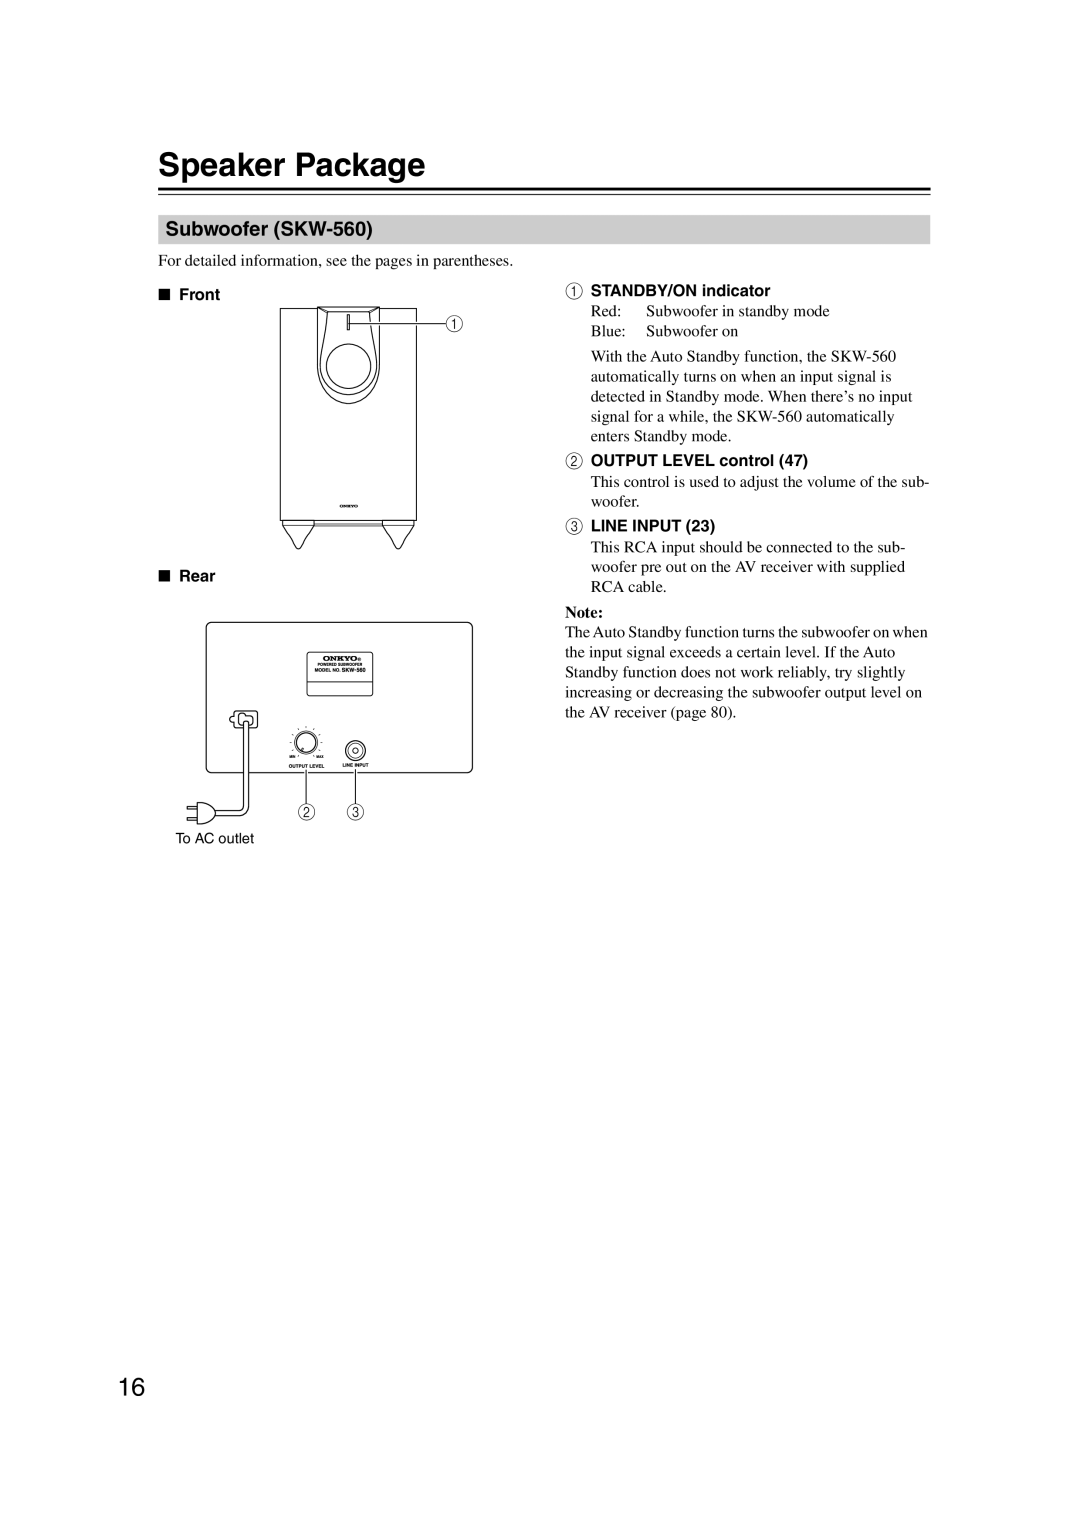 Onkyo HT-S5100 instruction manual Speaker Package, Subwoofer SKW-560 